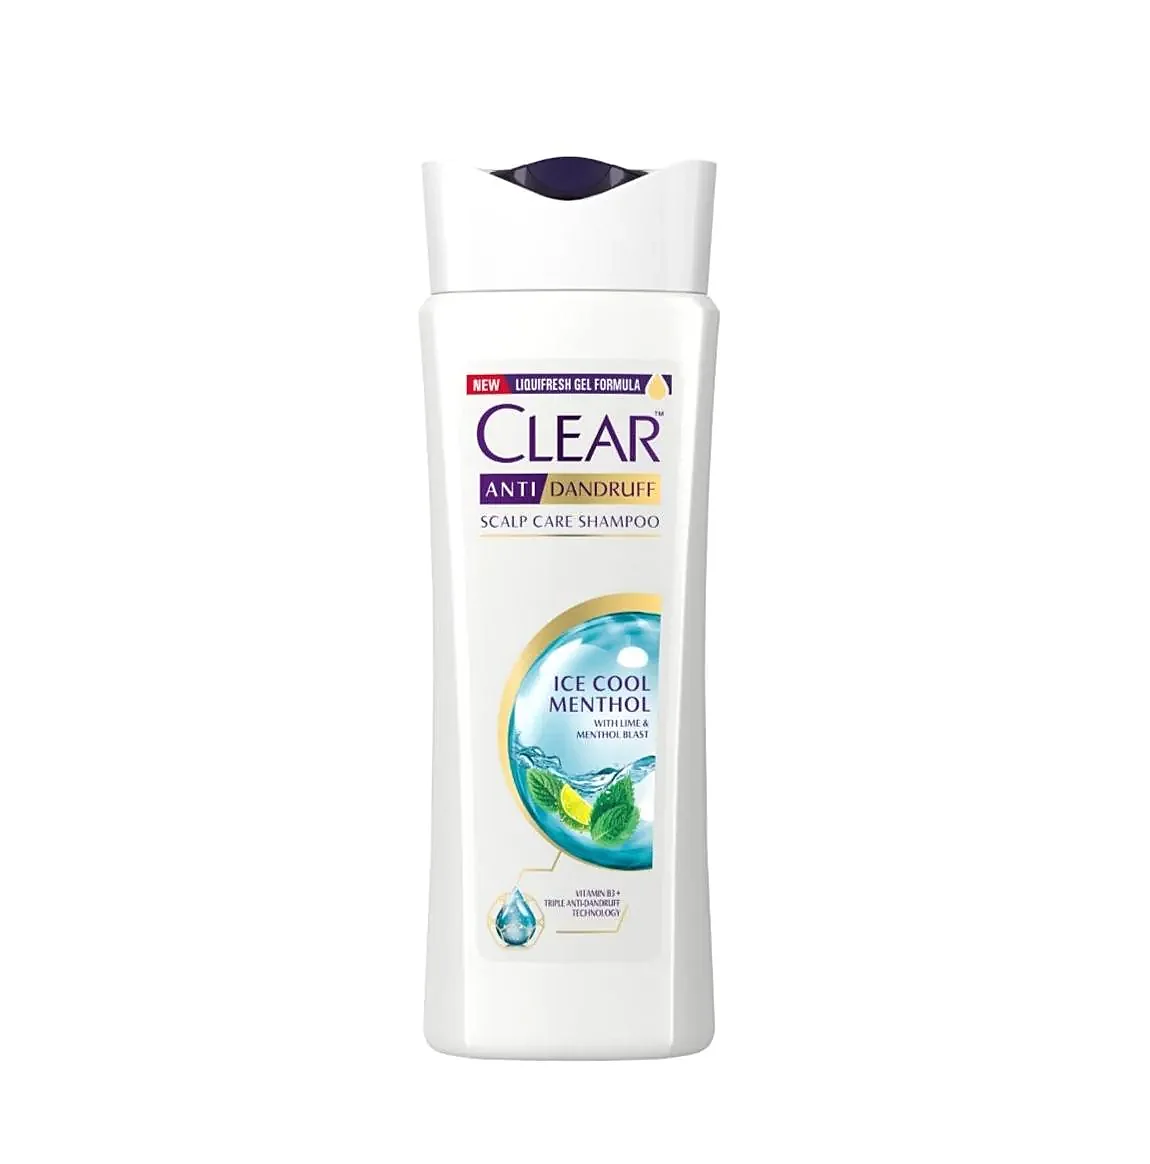 Clear Anti Dandruff Ice Cool Menthol Shampoo shampo anti ketombe